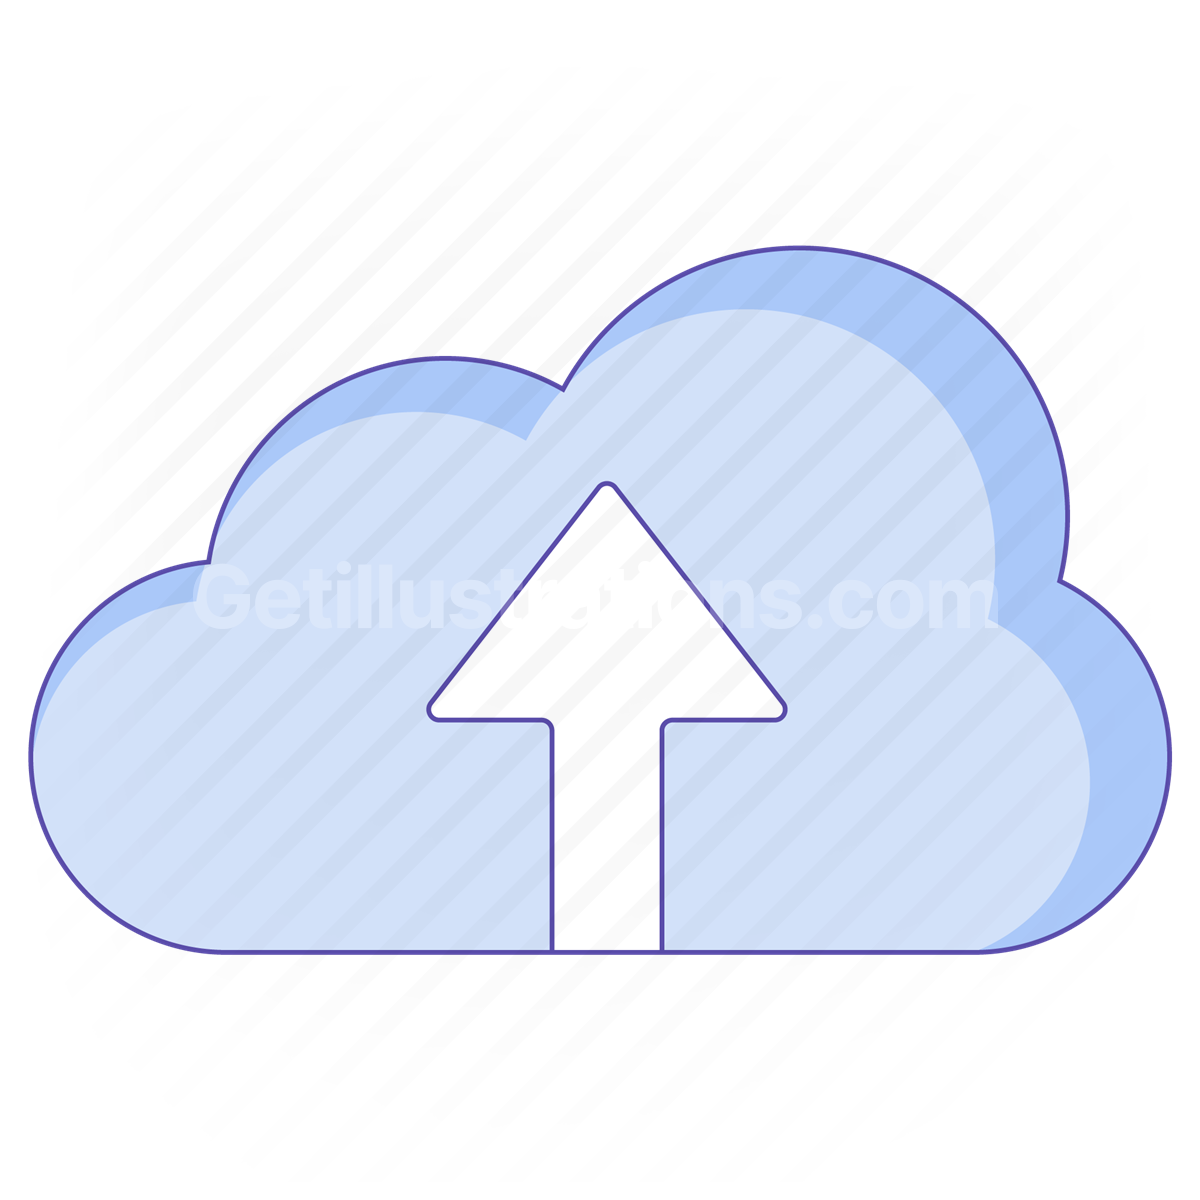 upload, storage, cloud, arrow, up, transfer